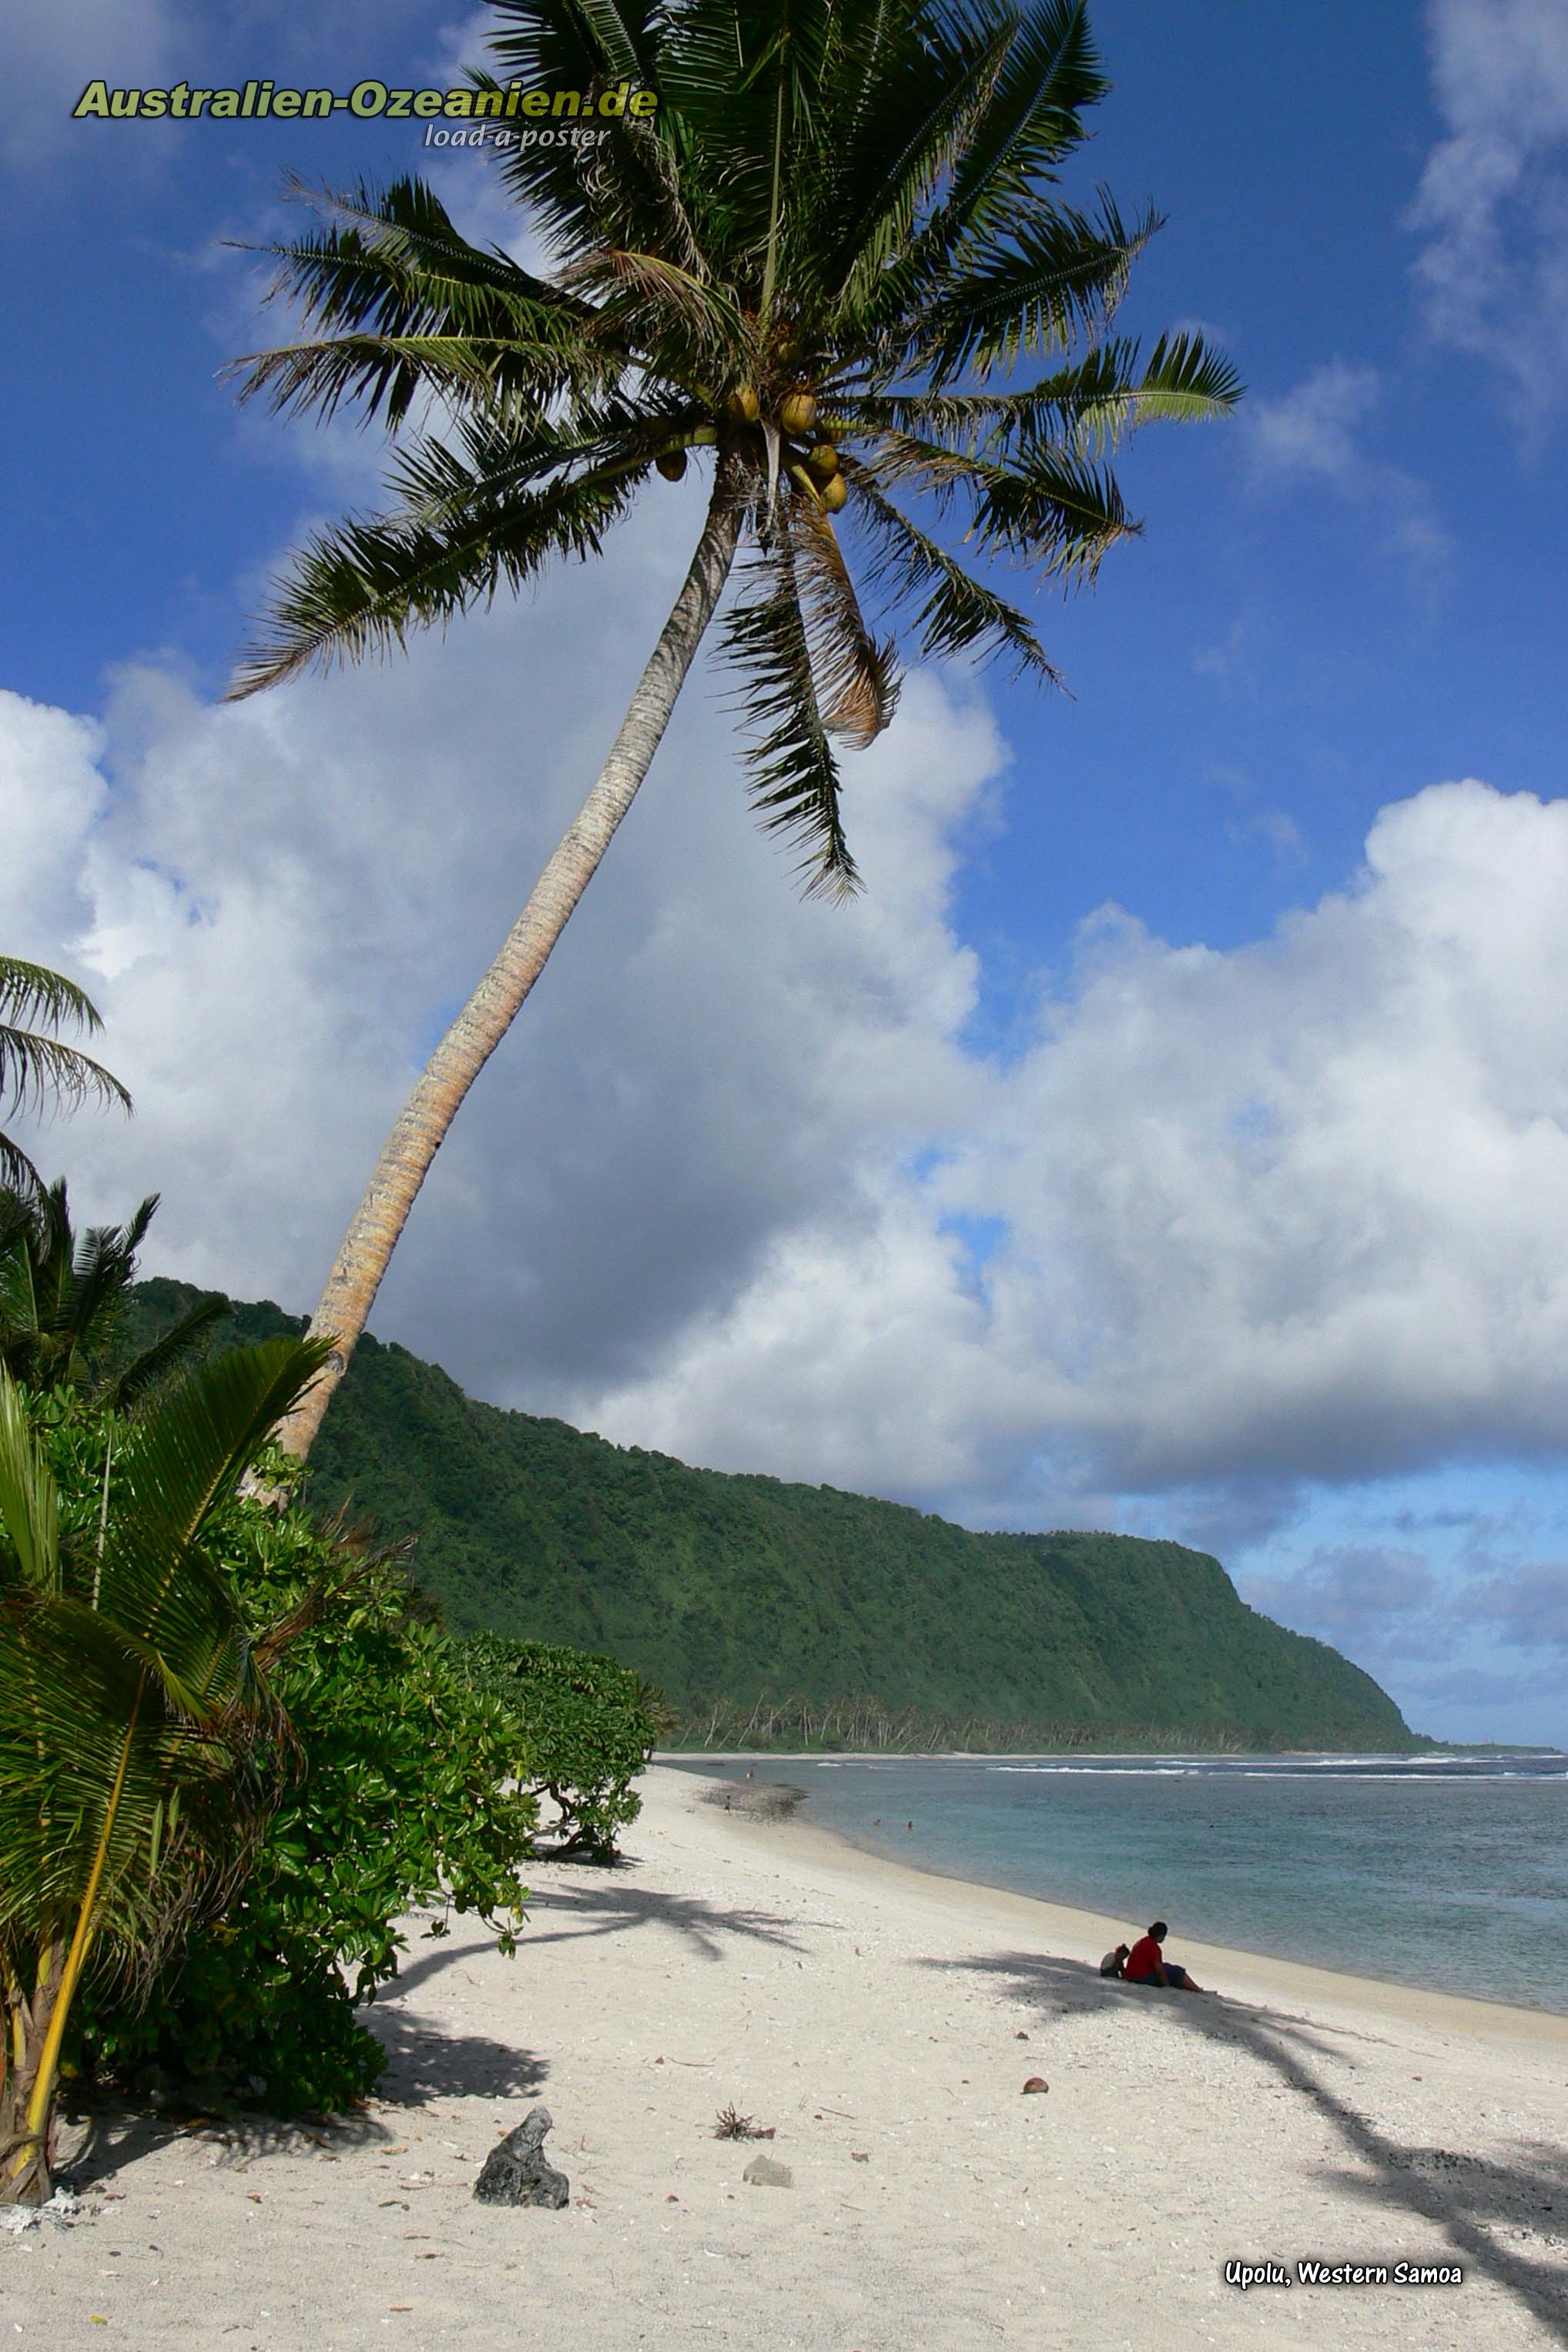 Beach at Lalomanu, Upolu - Samoa